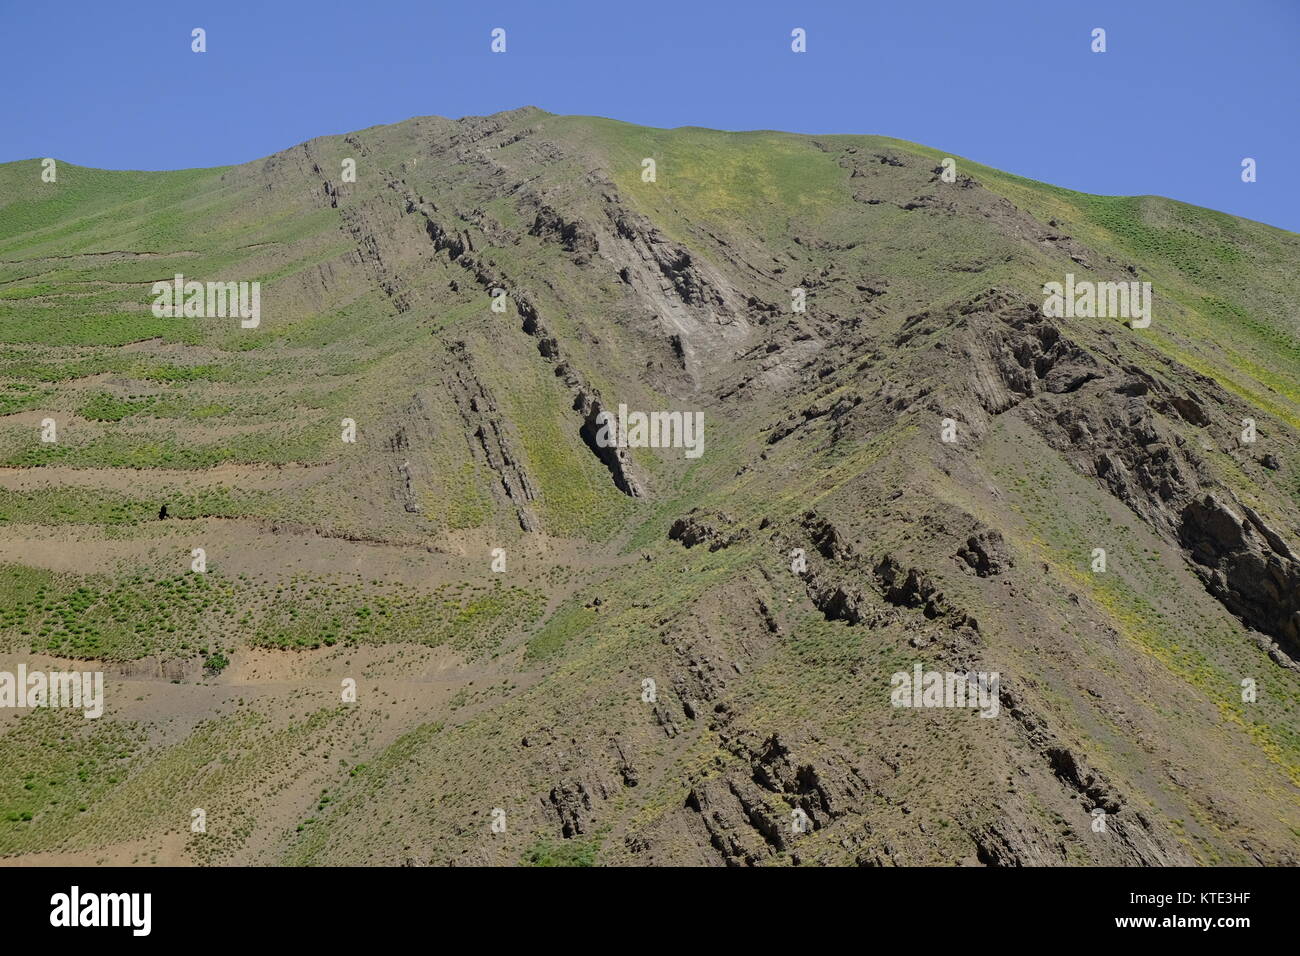 Dry mountain landscape near the city of Karaj in Iran Stock Photo